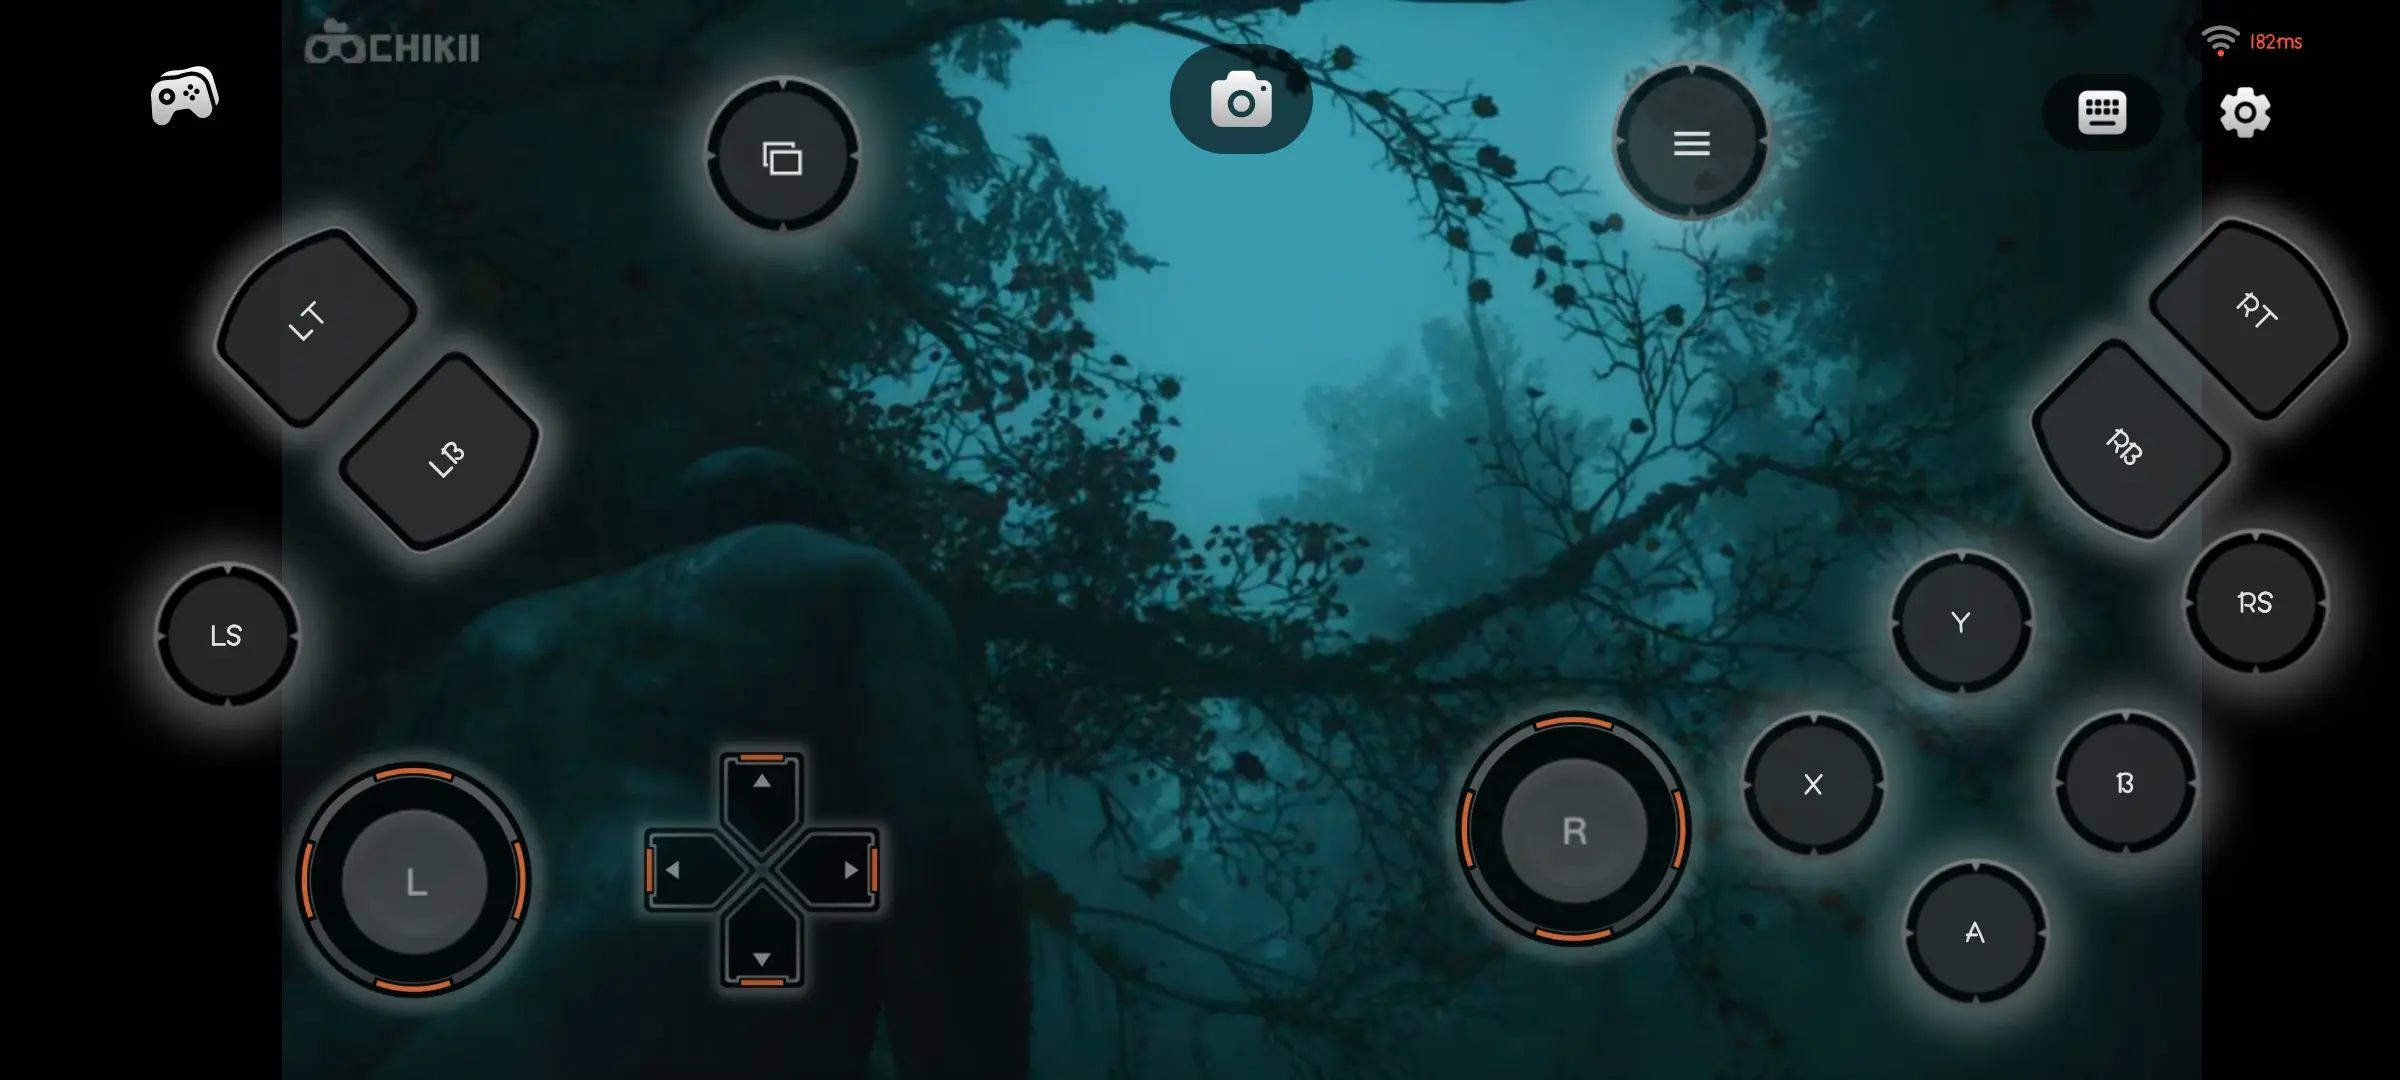 Alan Wake 2 android download free full version - APK OBB - cloud gaming app chikii